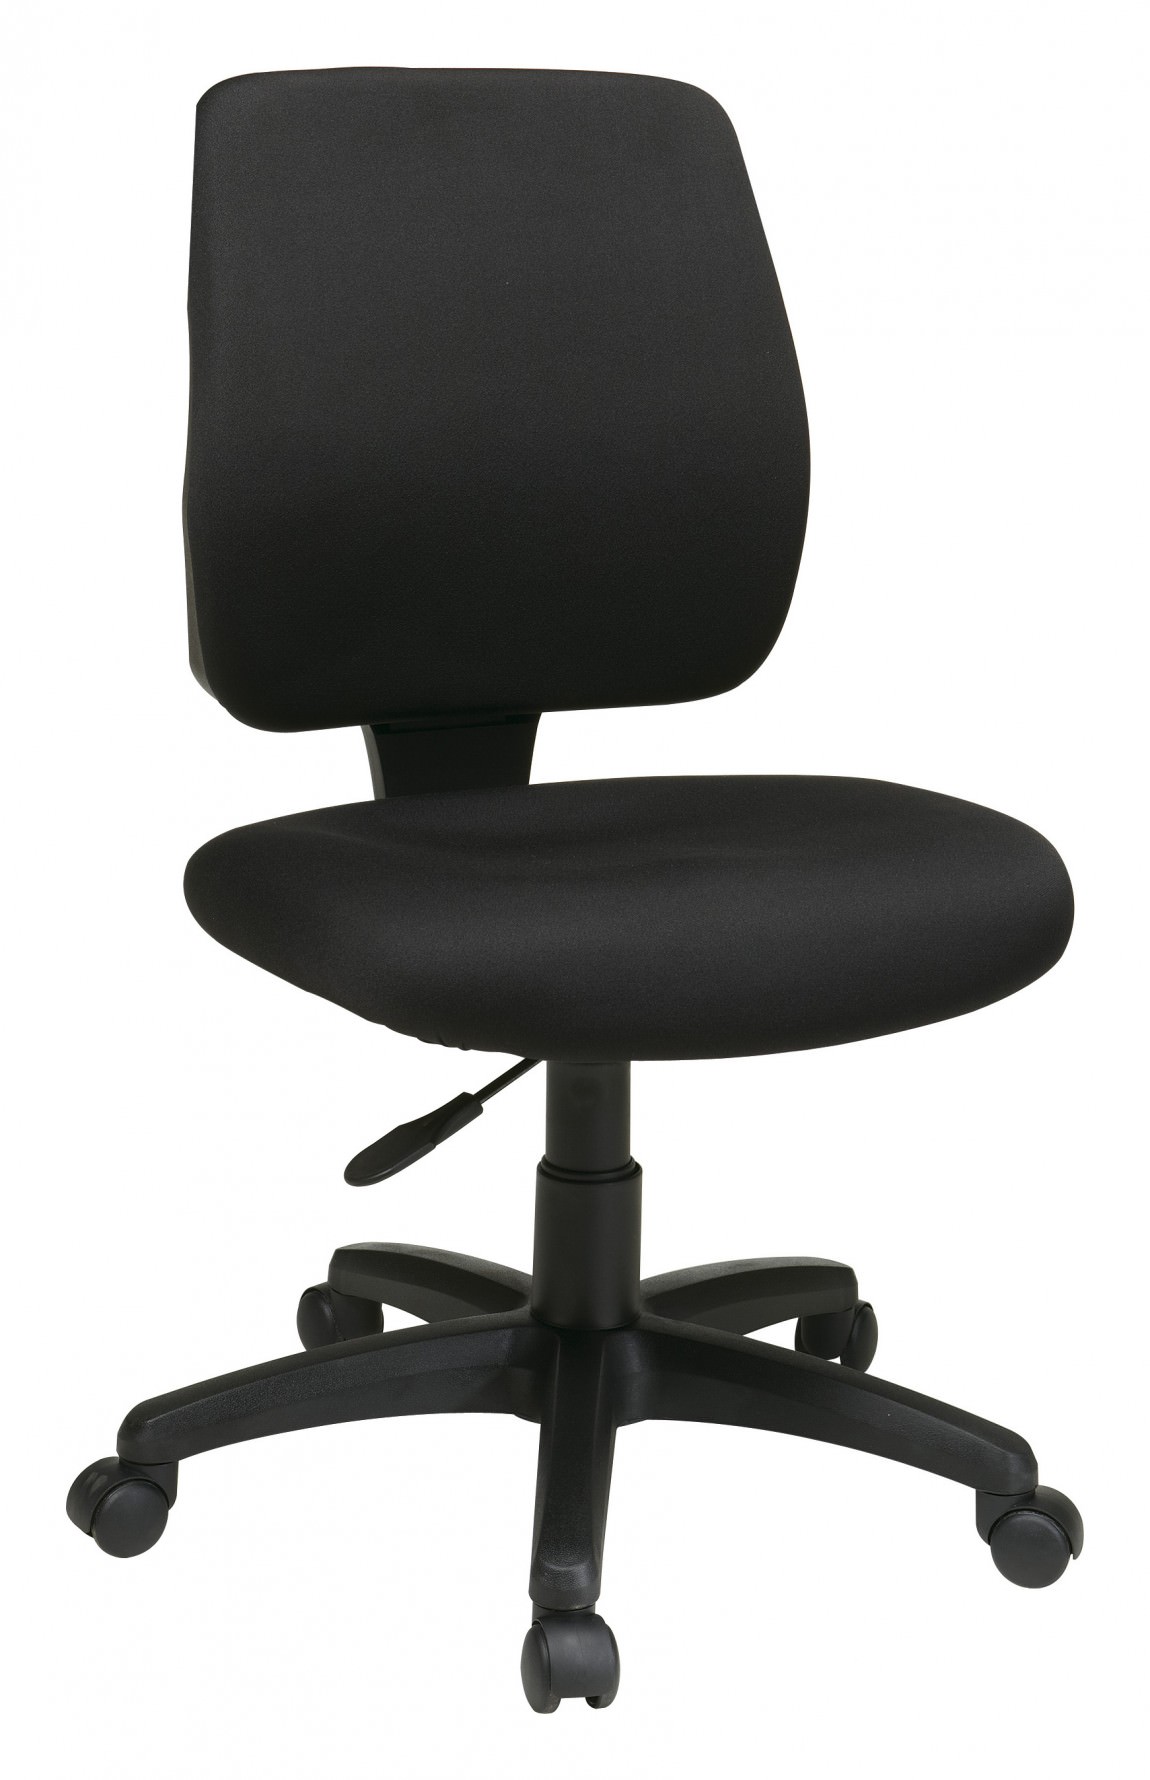 https://madisonliquidators.com/images/p/1150/25982-armless-office-chair-1.jpg